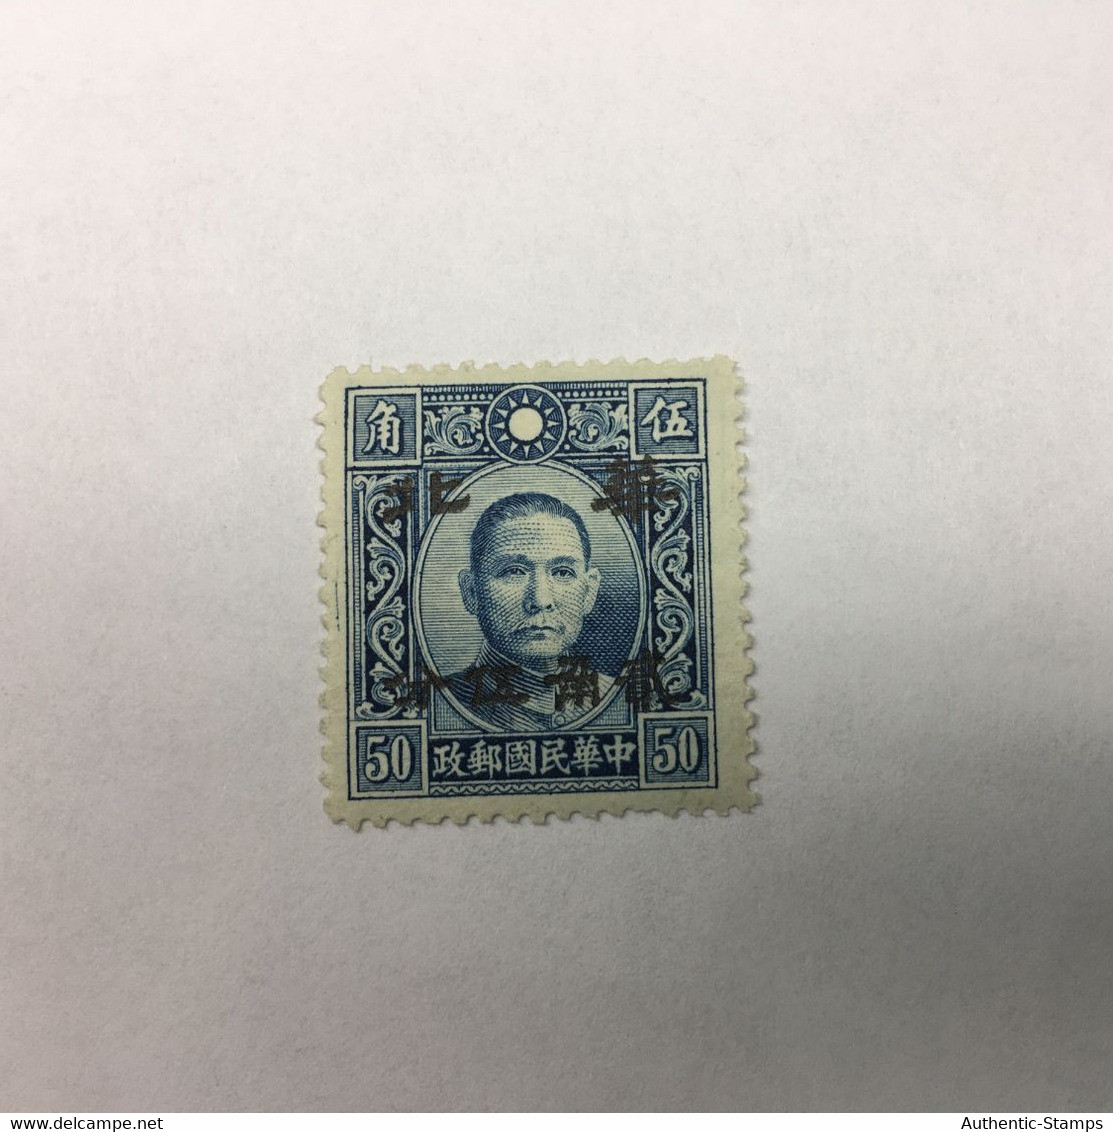 CHINA STAMP, USED, TIMBRO, STEMPEL, CINA, CHINE, LIST 5805 - 1941-45 Northern China